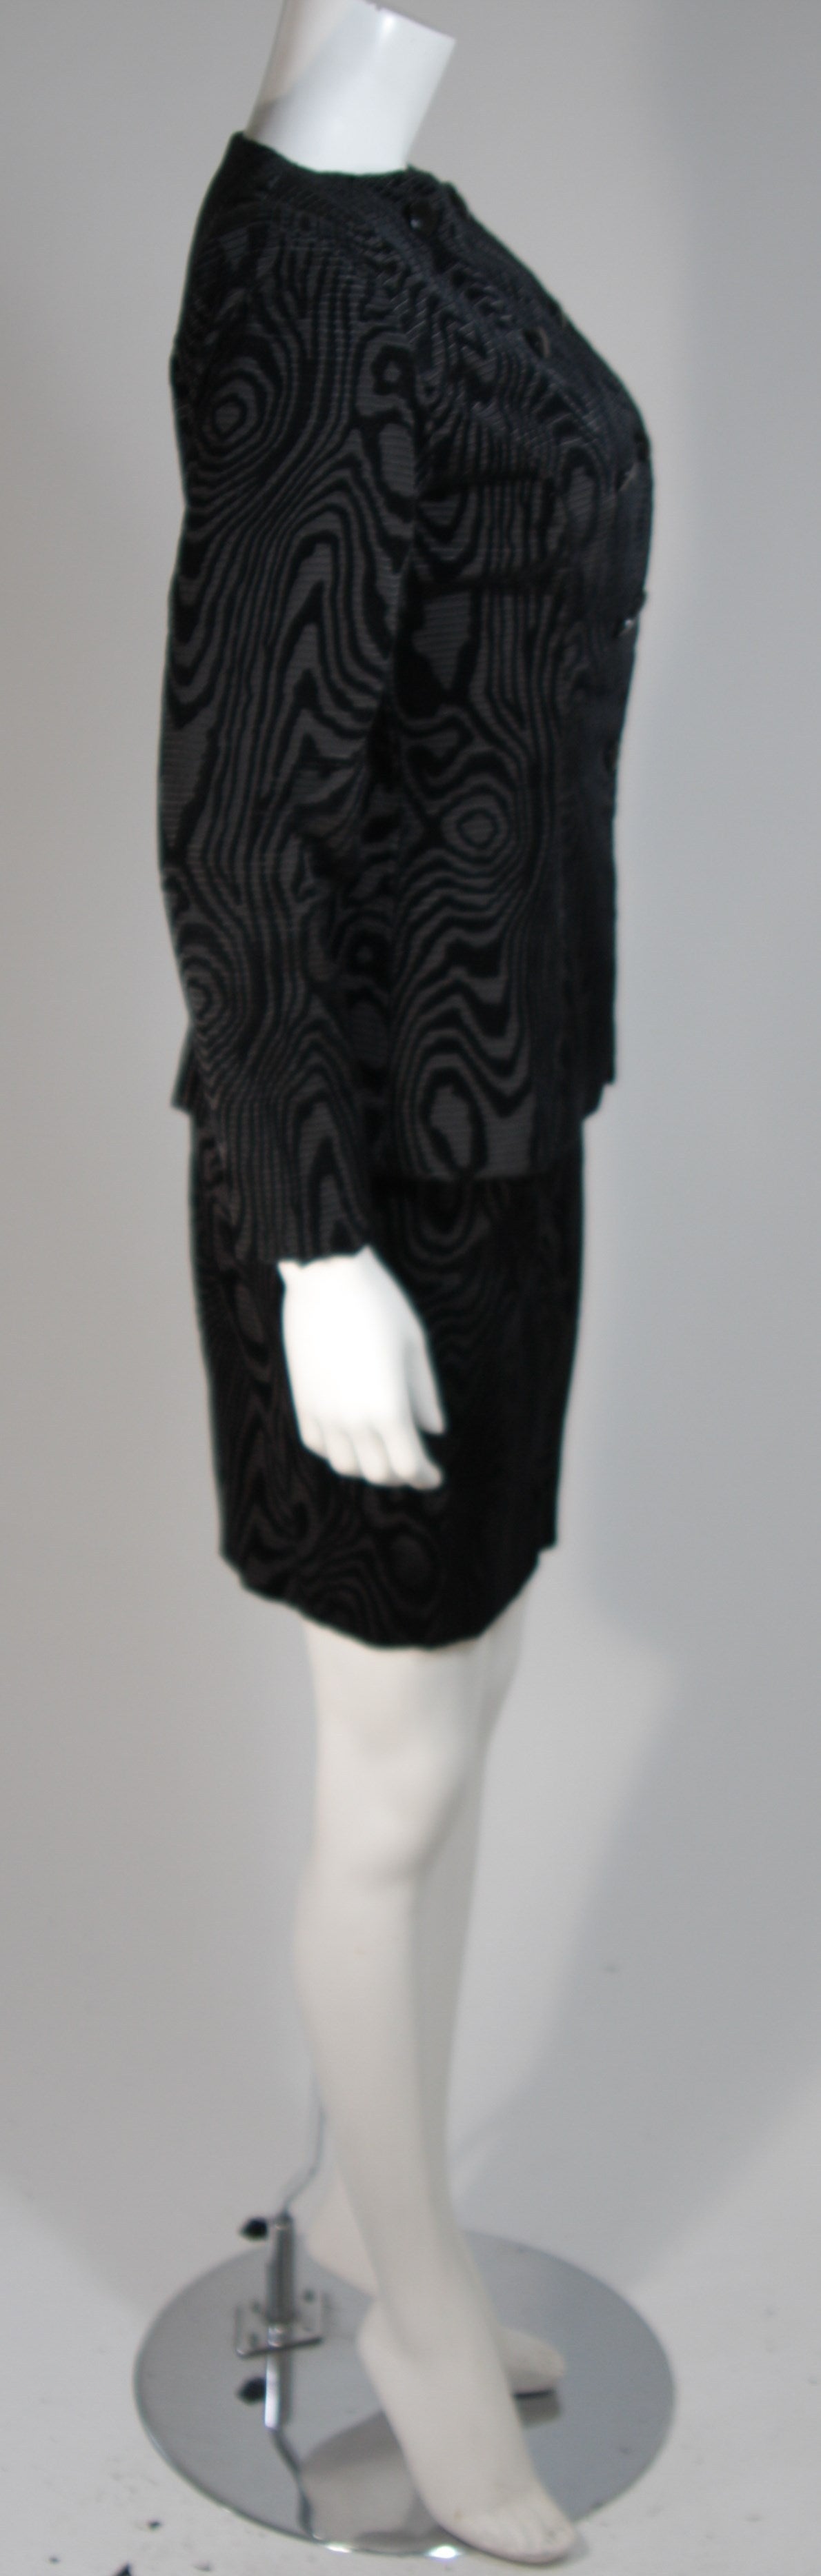 Vicky Tiel Black Silk Skirt Suit with Patterned Velvet Accents Size 38 1